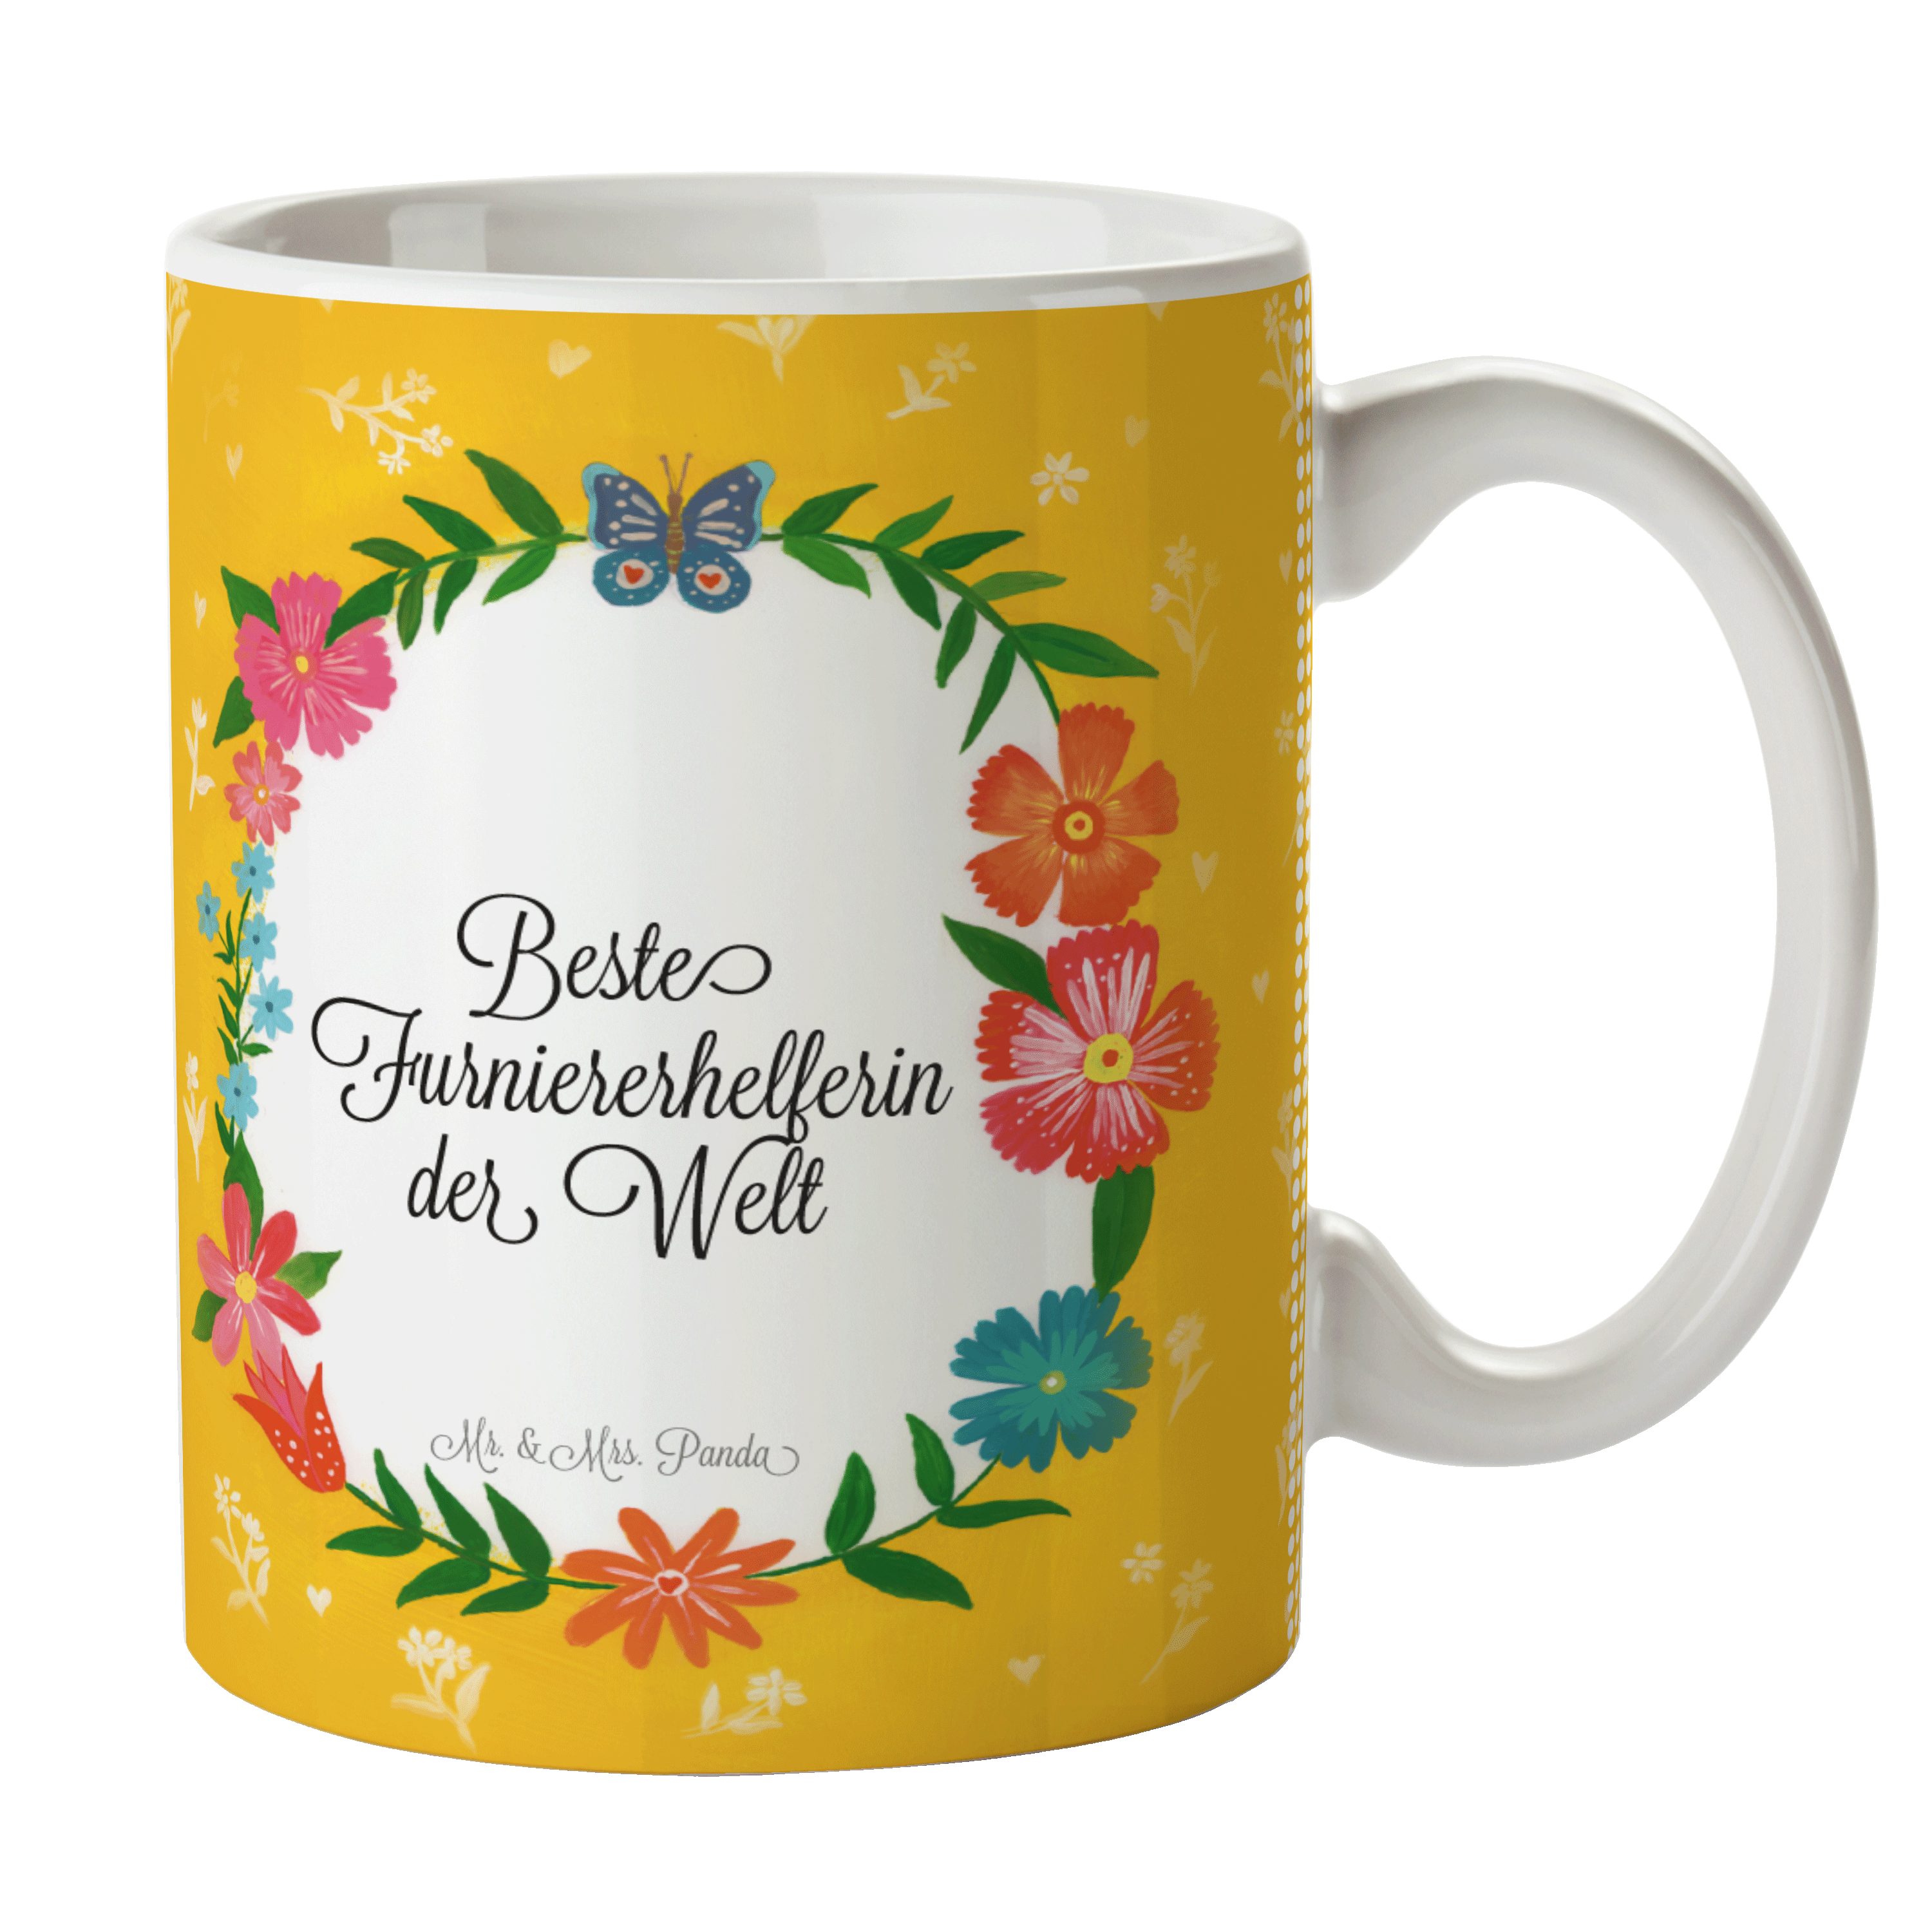 Mr. & Mrs. Panda Furniererhelferin Tasse Tasse Abschluss, Geschenk, Kaffeebecher, Keramik - Motive